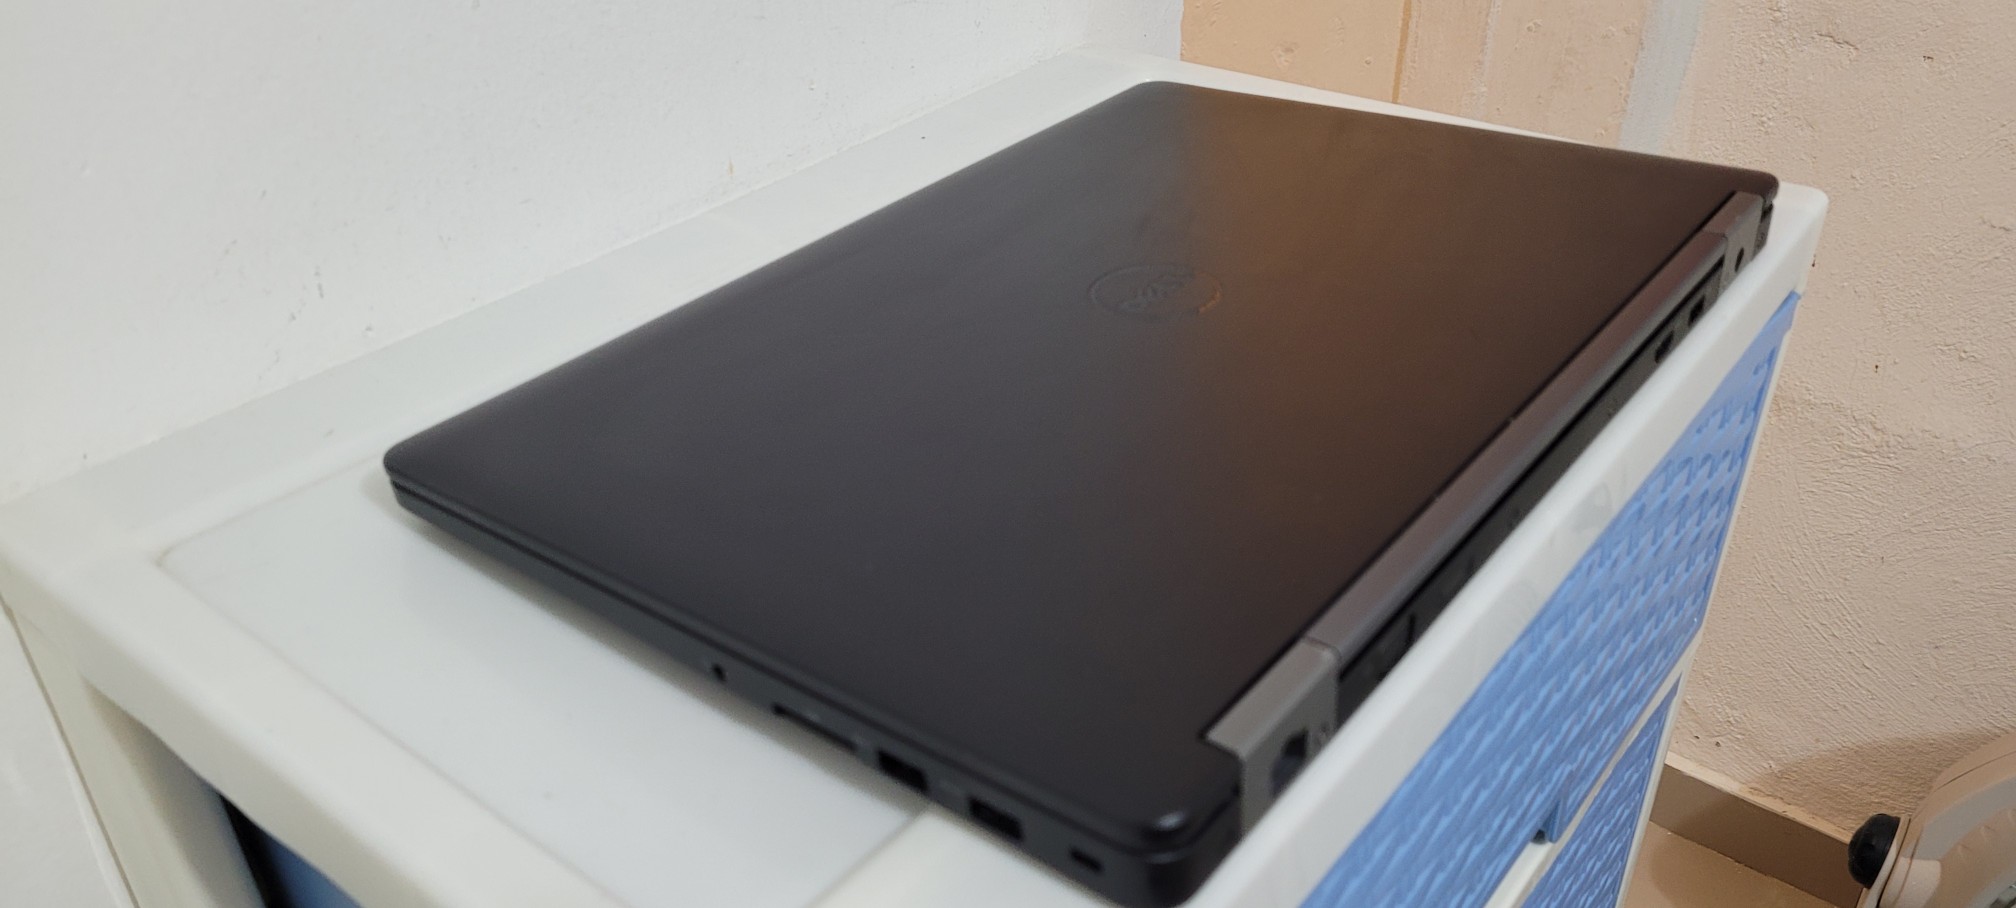 computadoras y laptops - Laptop Dell 17 Pulg Core i7 Ram 12gb Disco SSD Video 6gb 2